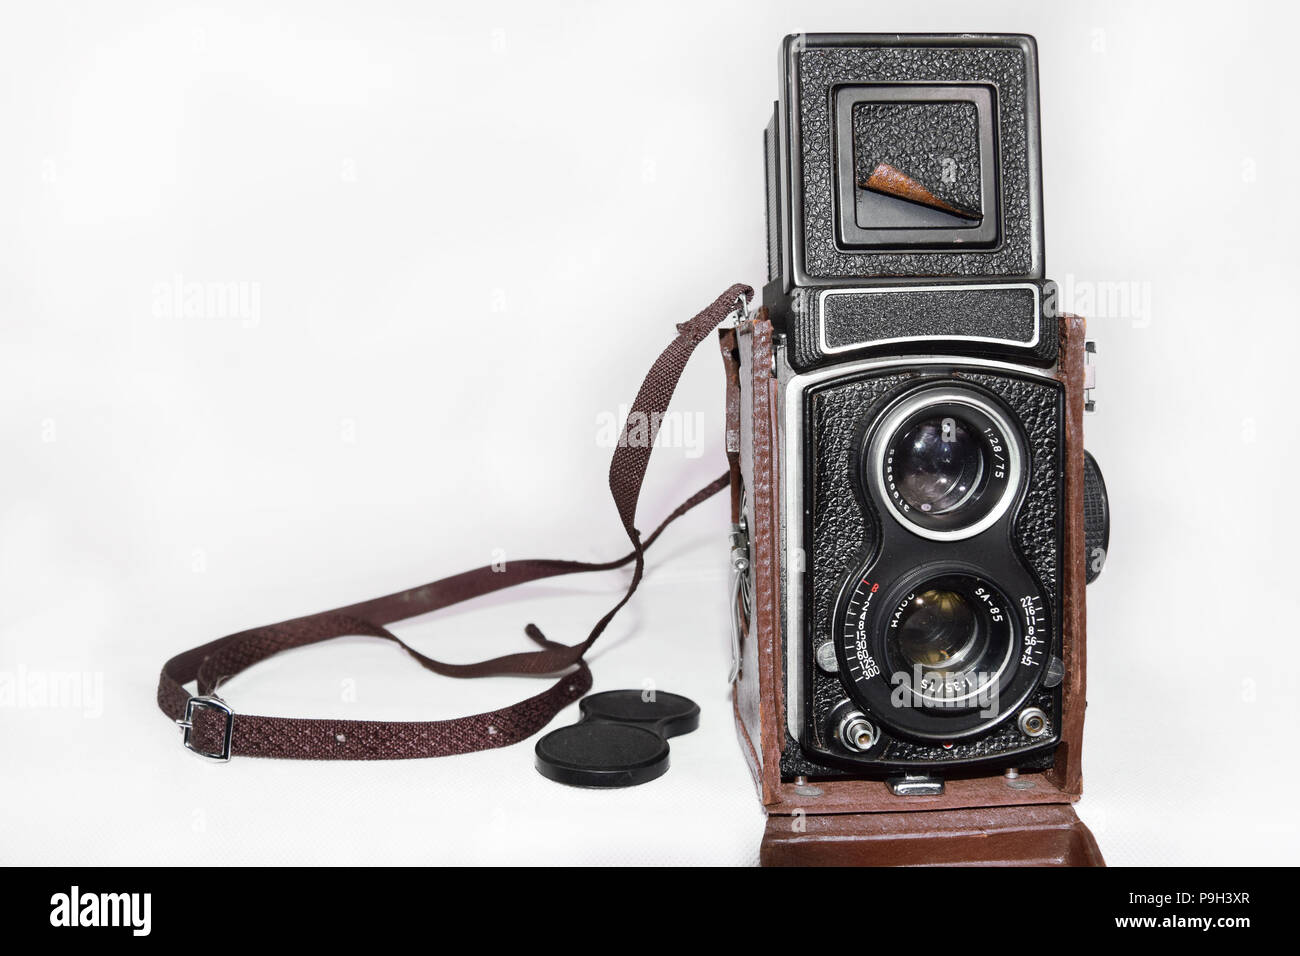 Vintage Kamera - Altmodische antike Box Kamera, isoliertes Objekt  Stockfotografie - Alamy